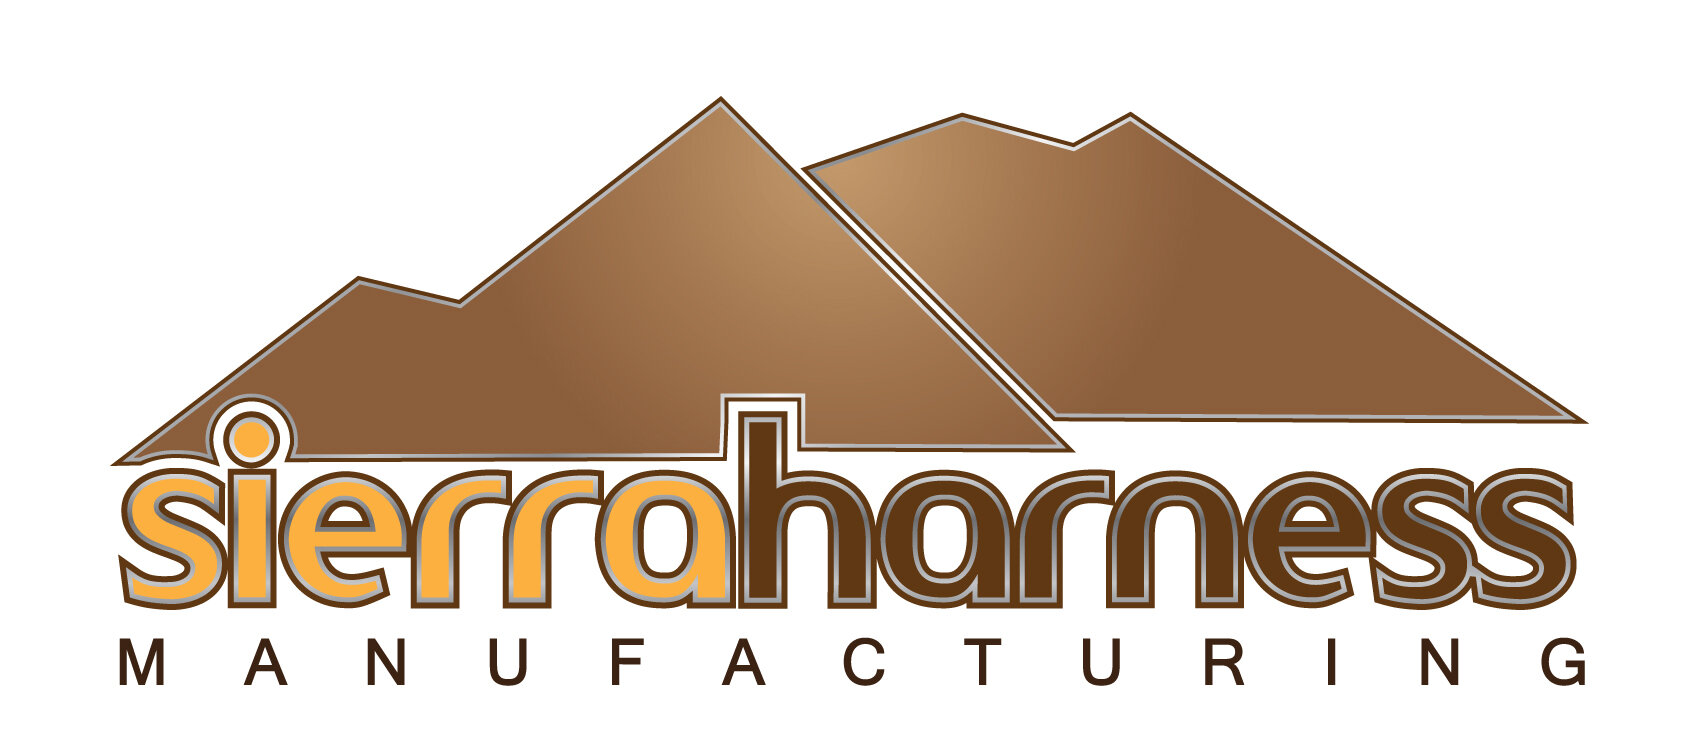 Sierra Harness Manufacturing